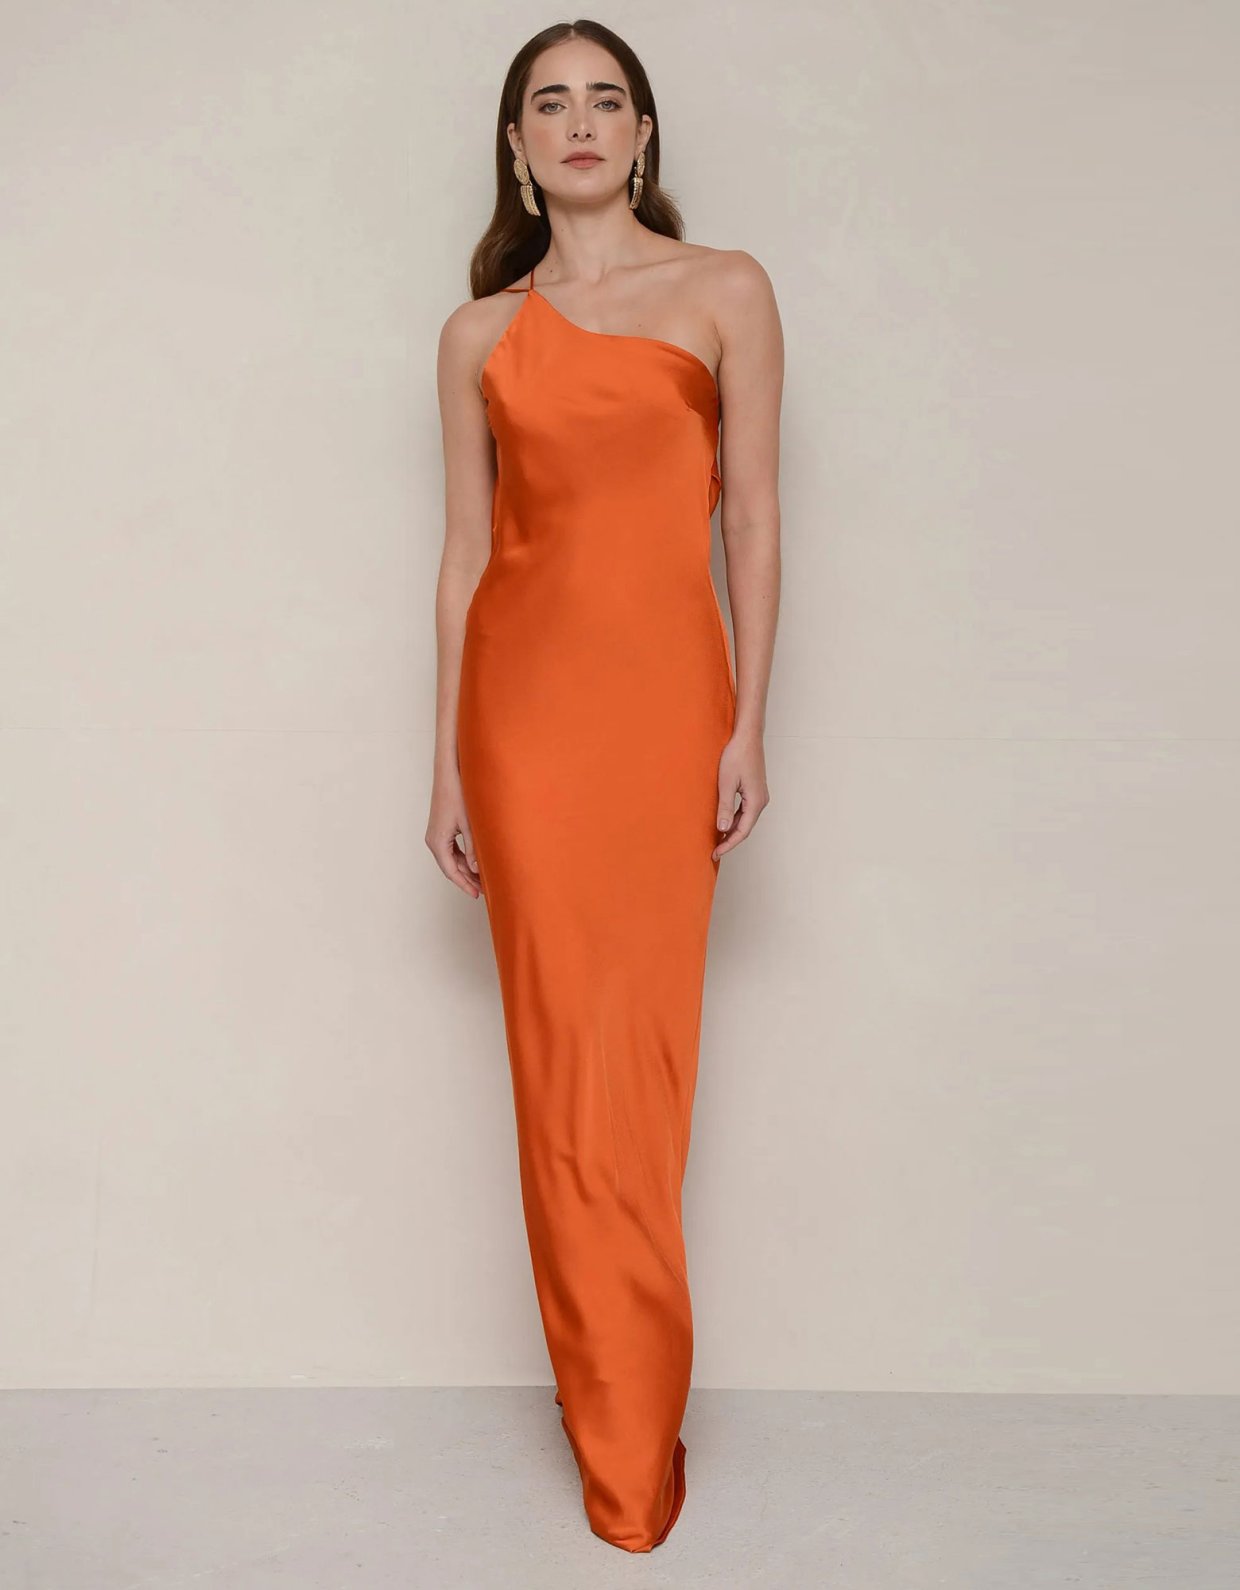 NASH Celeste orange dress